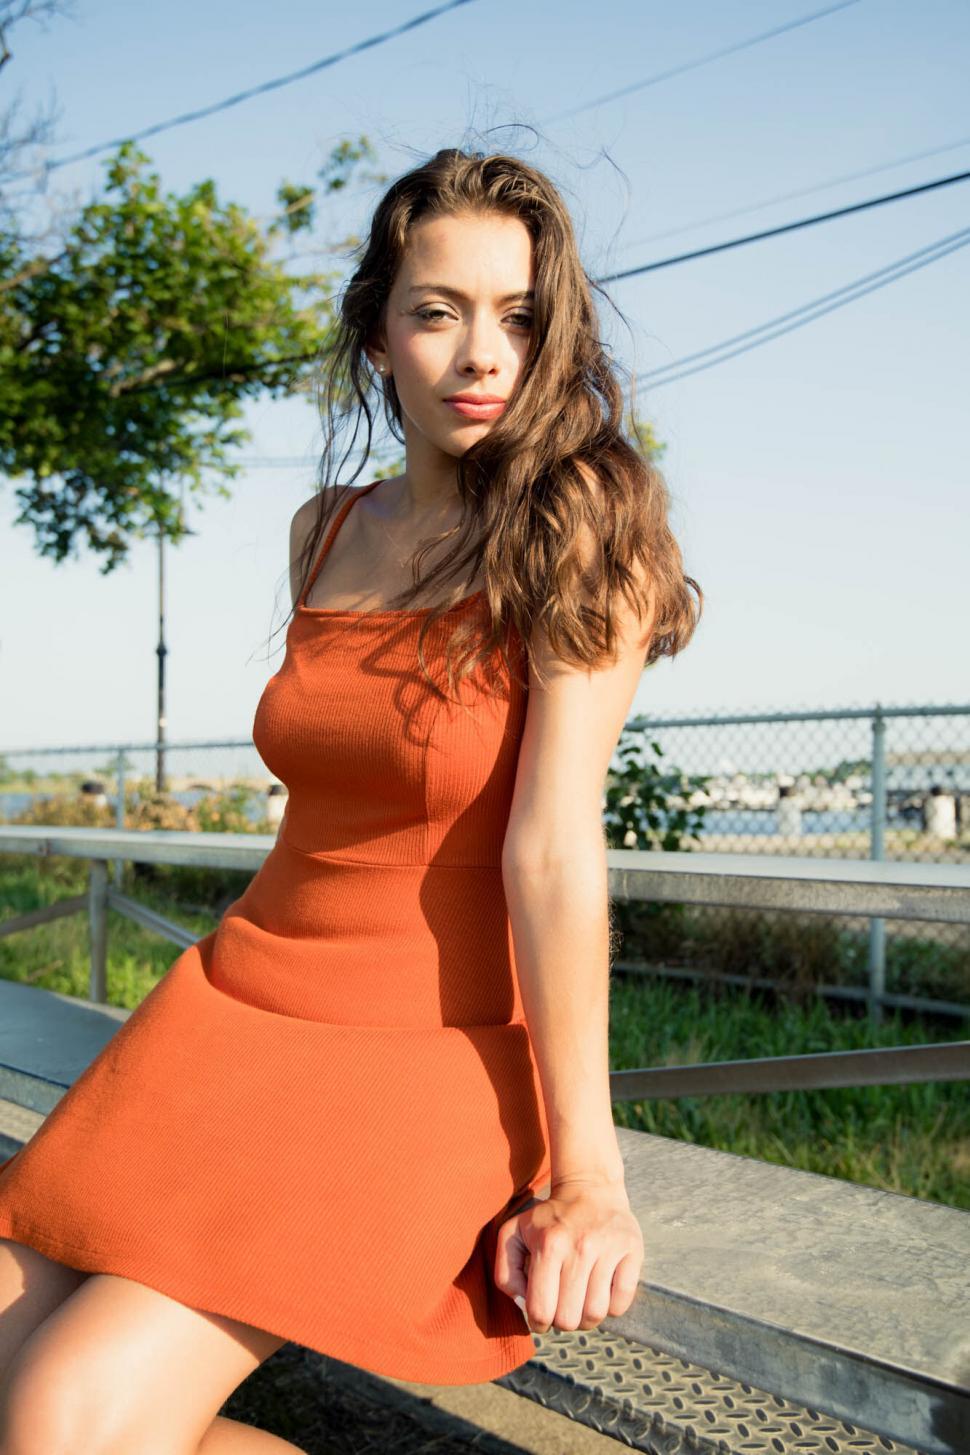 Free Image of Woman in orange dress sitting on bench 